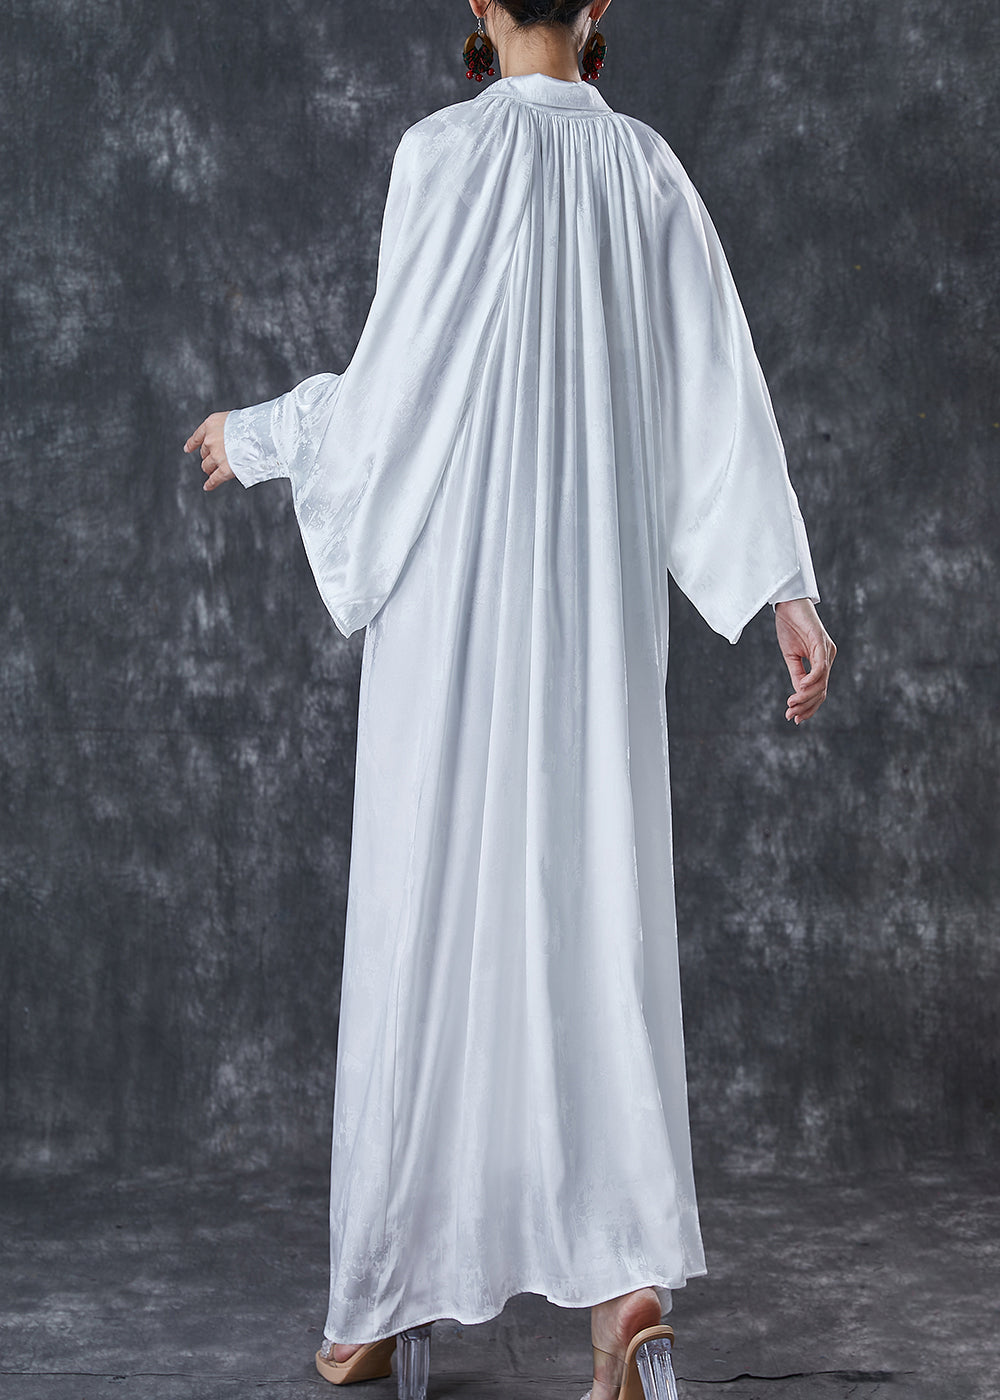 Fine White High Neck Draping Wear On Both Sides Silk Long Dresses Spring